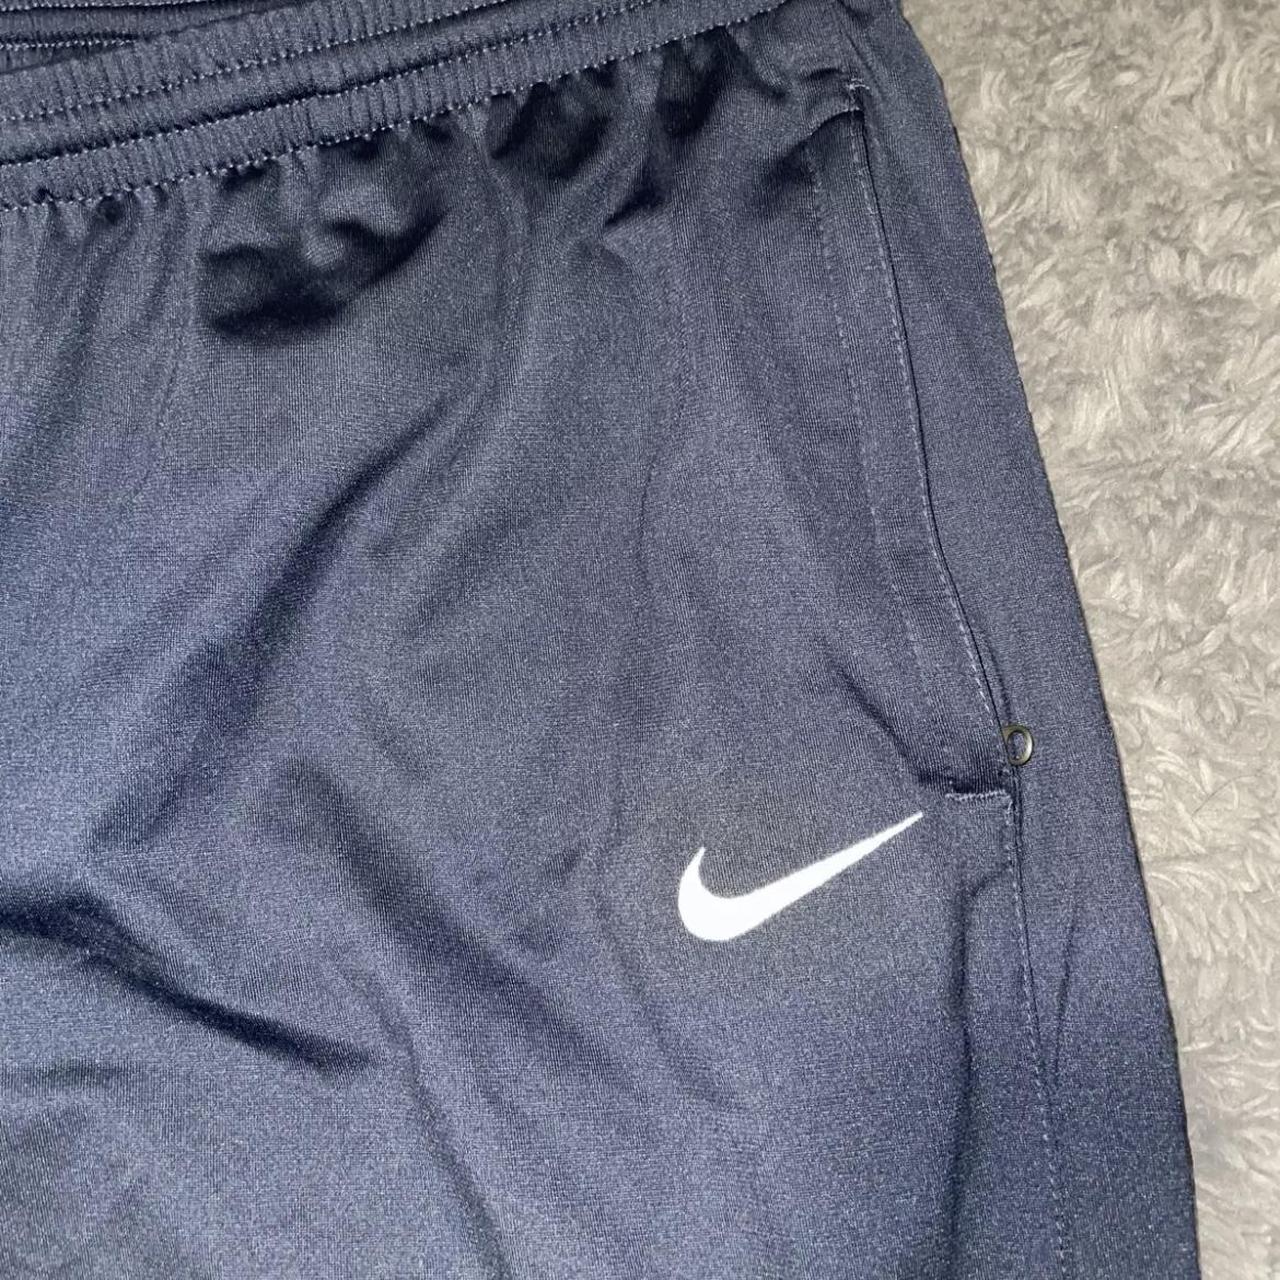 Women's Nike tracksuit bottoms / joggers Navy blue - Depop